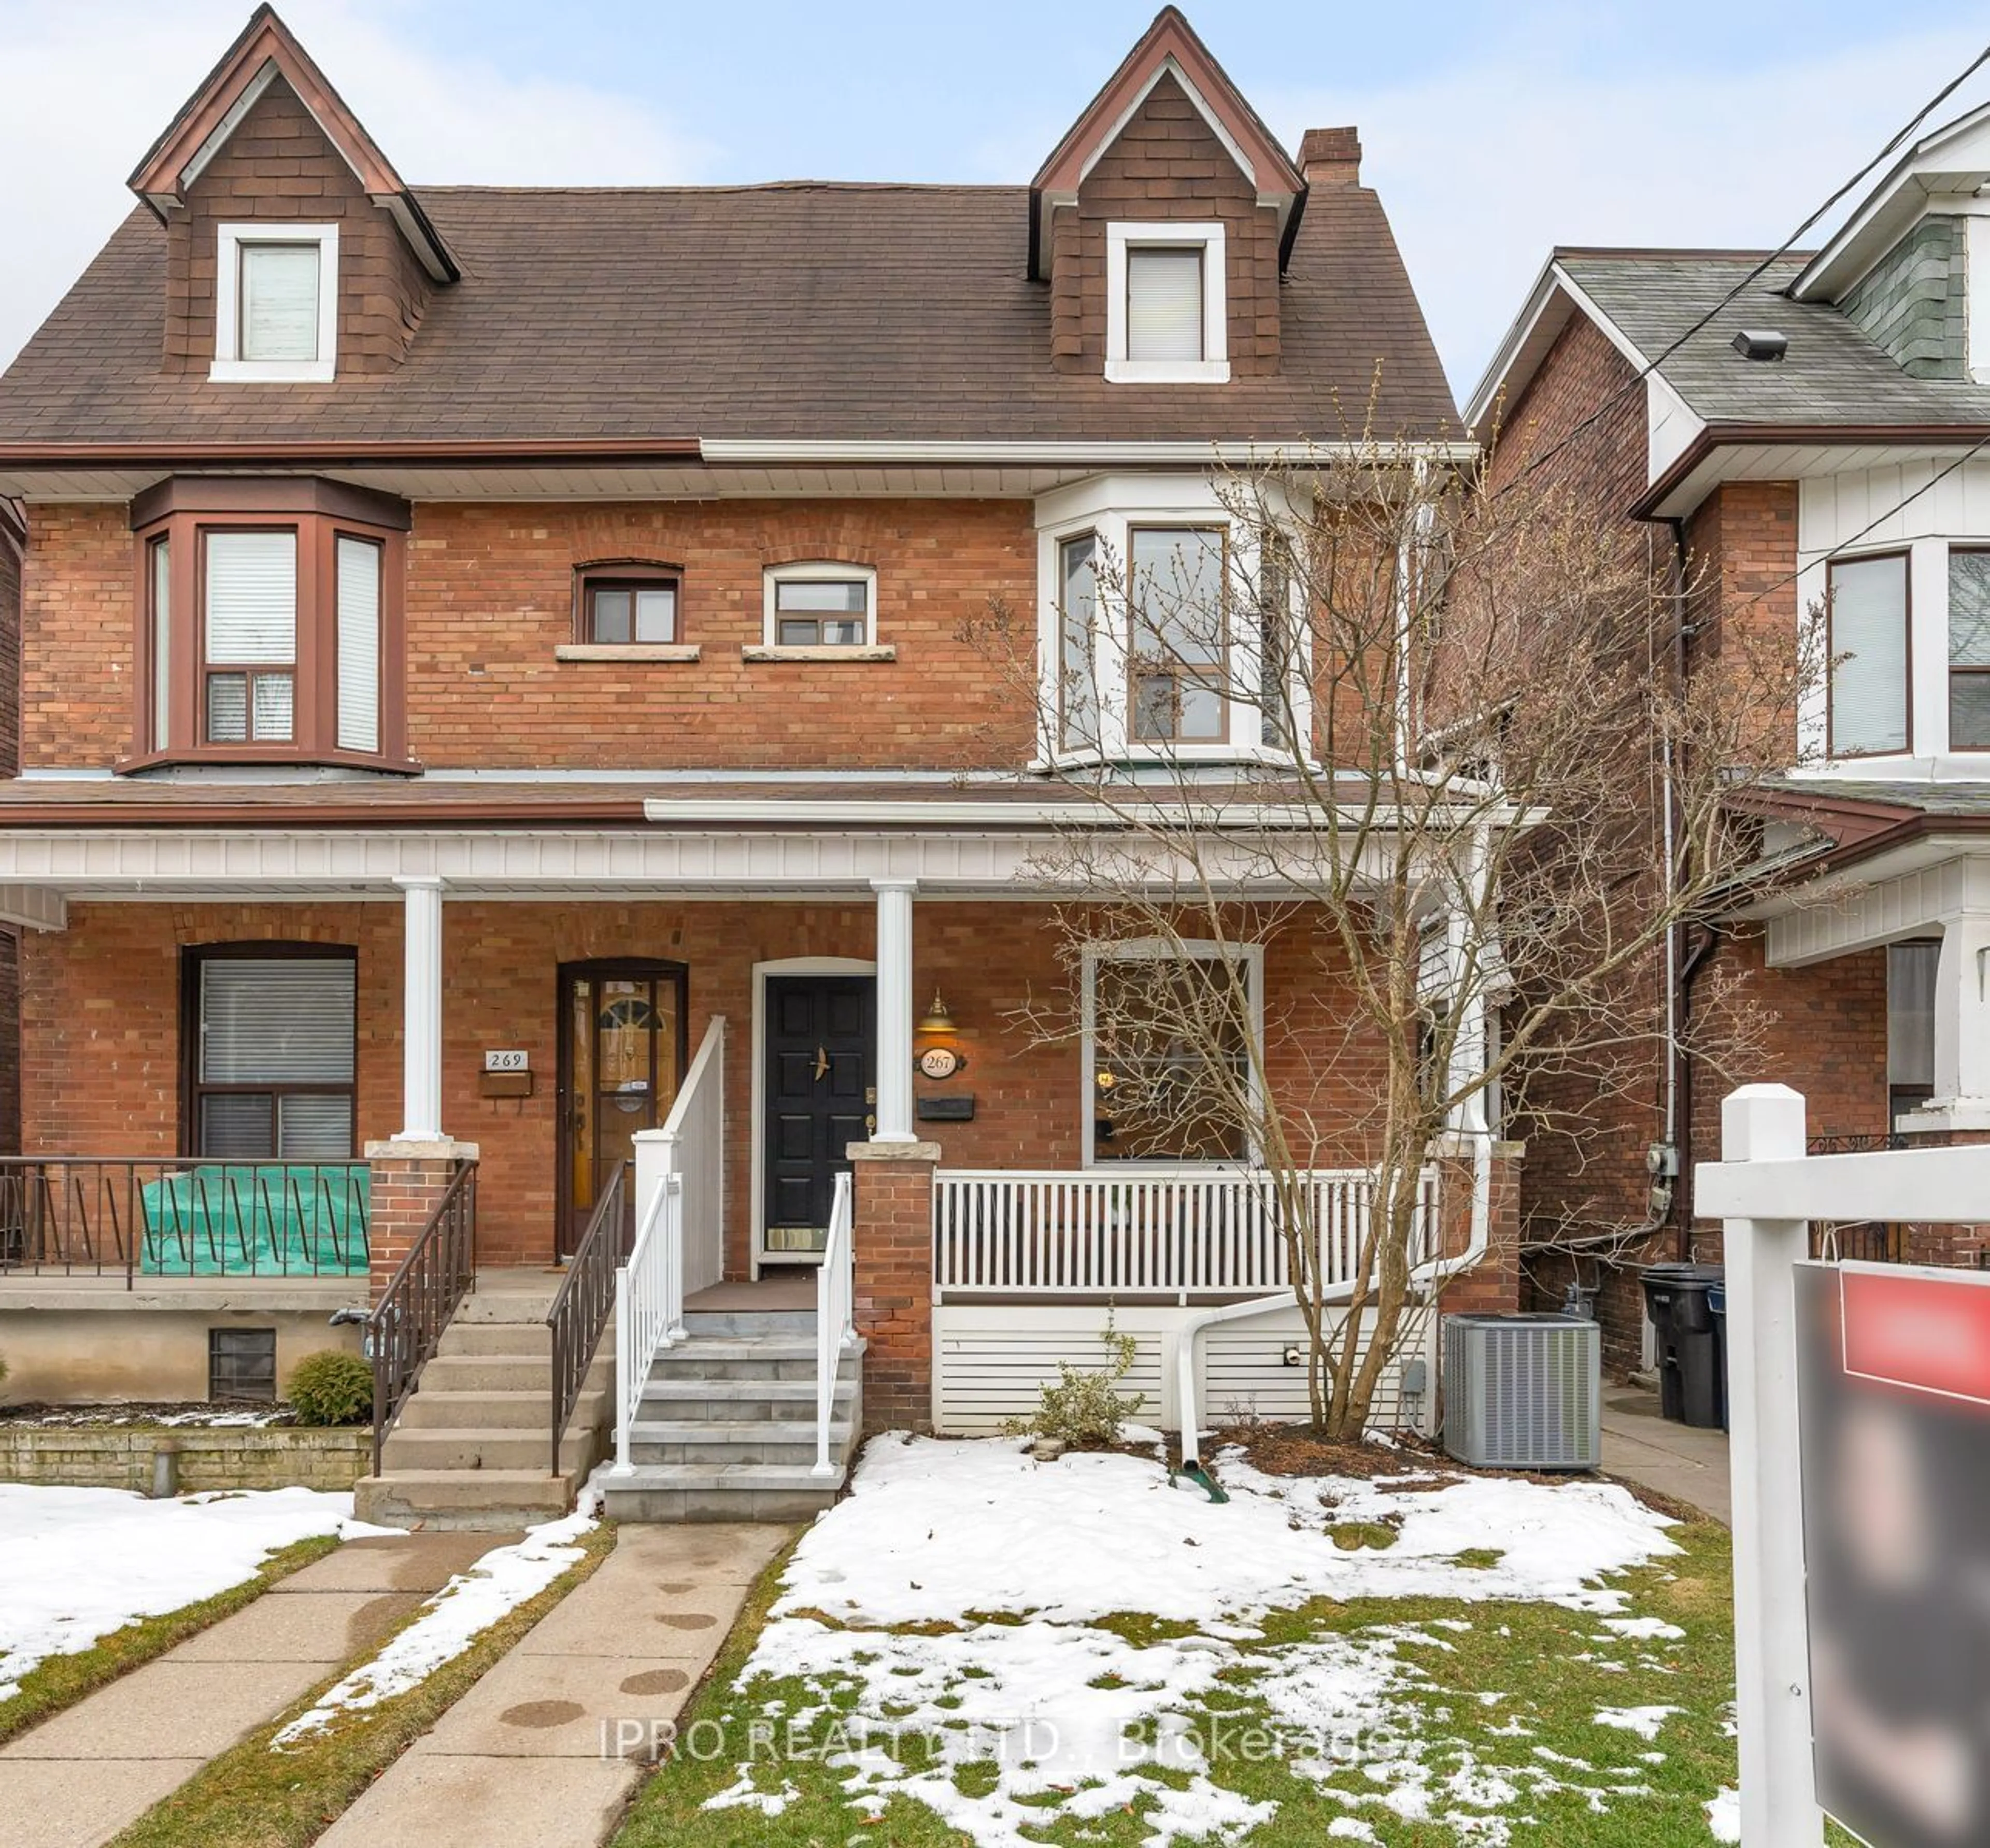 Home with brick exterior material for 267 Strathmore Blvd, Toronto Ontario M4J 1P7